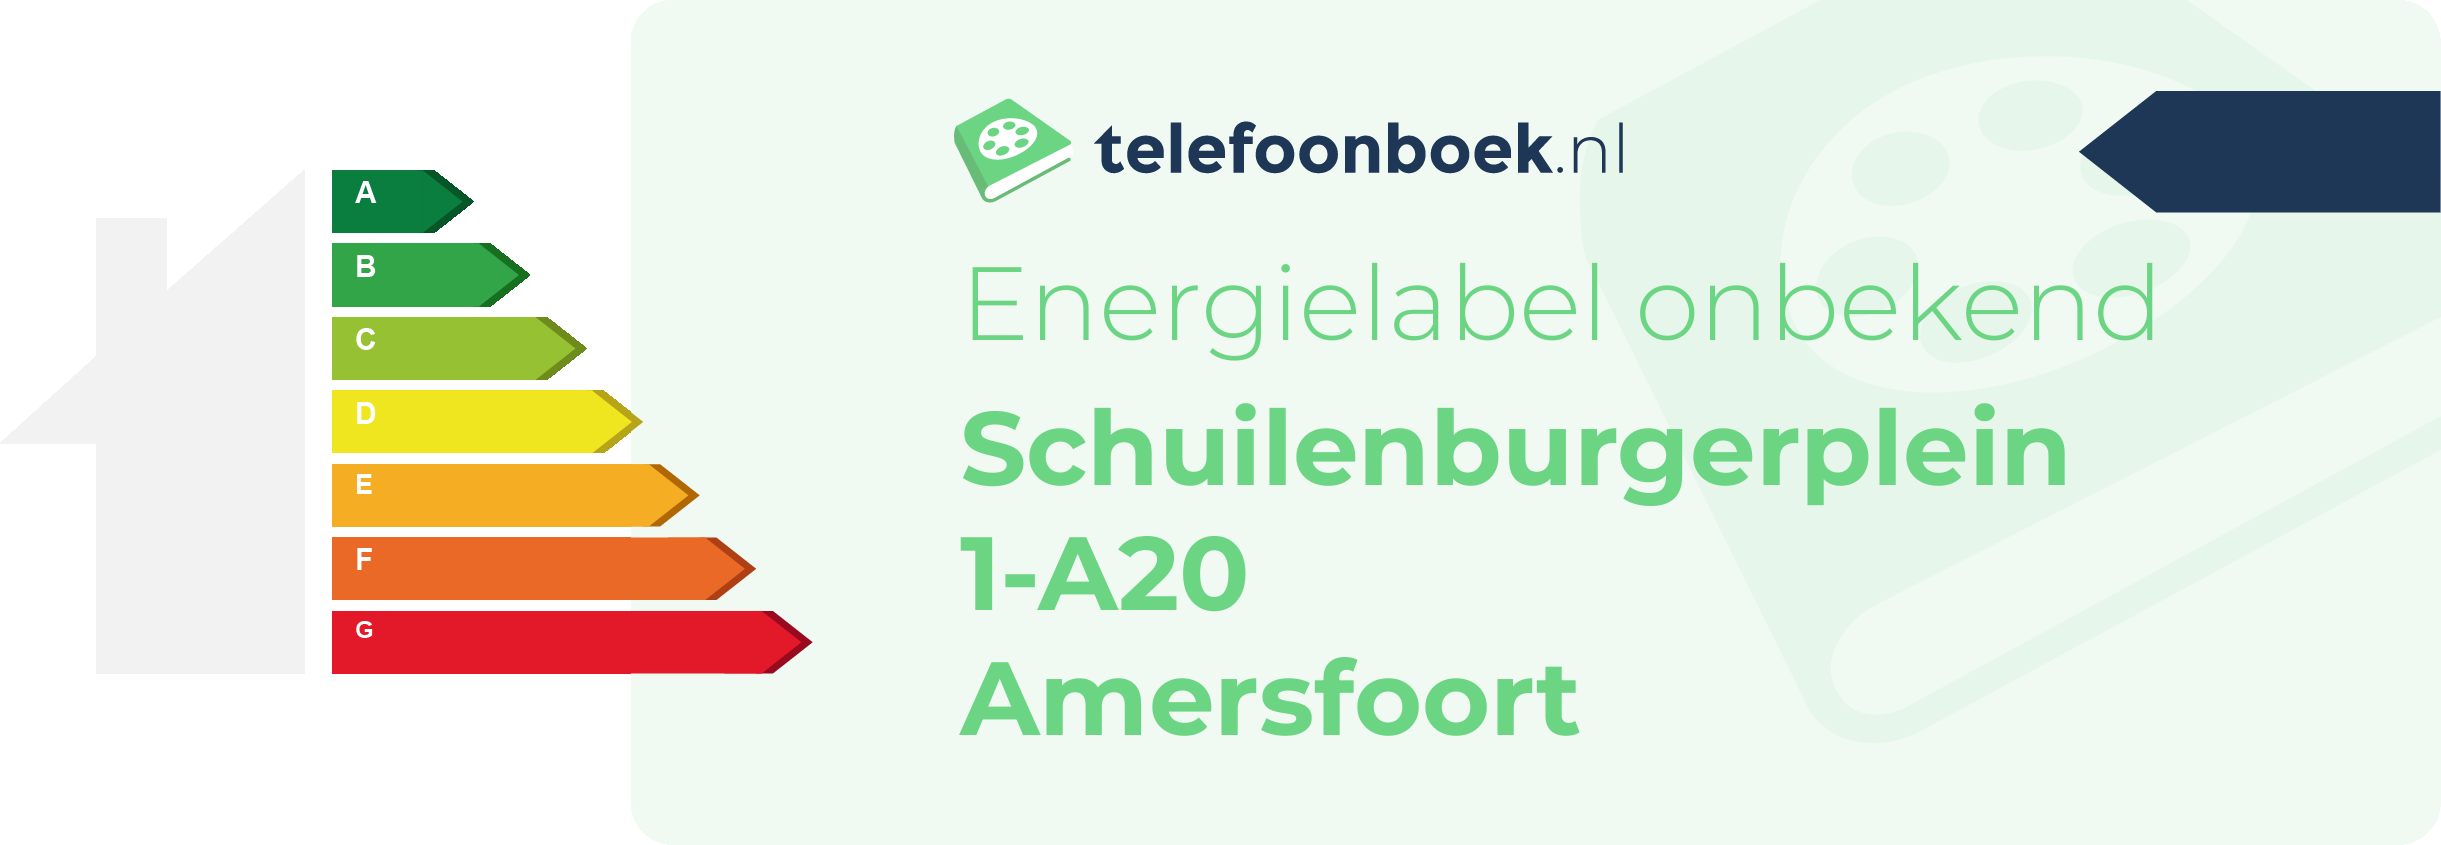 Energielabel Schuilenburgerplein 1-A20 Amersfoort